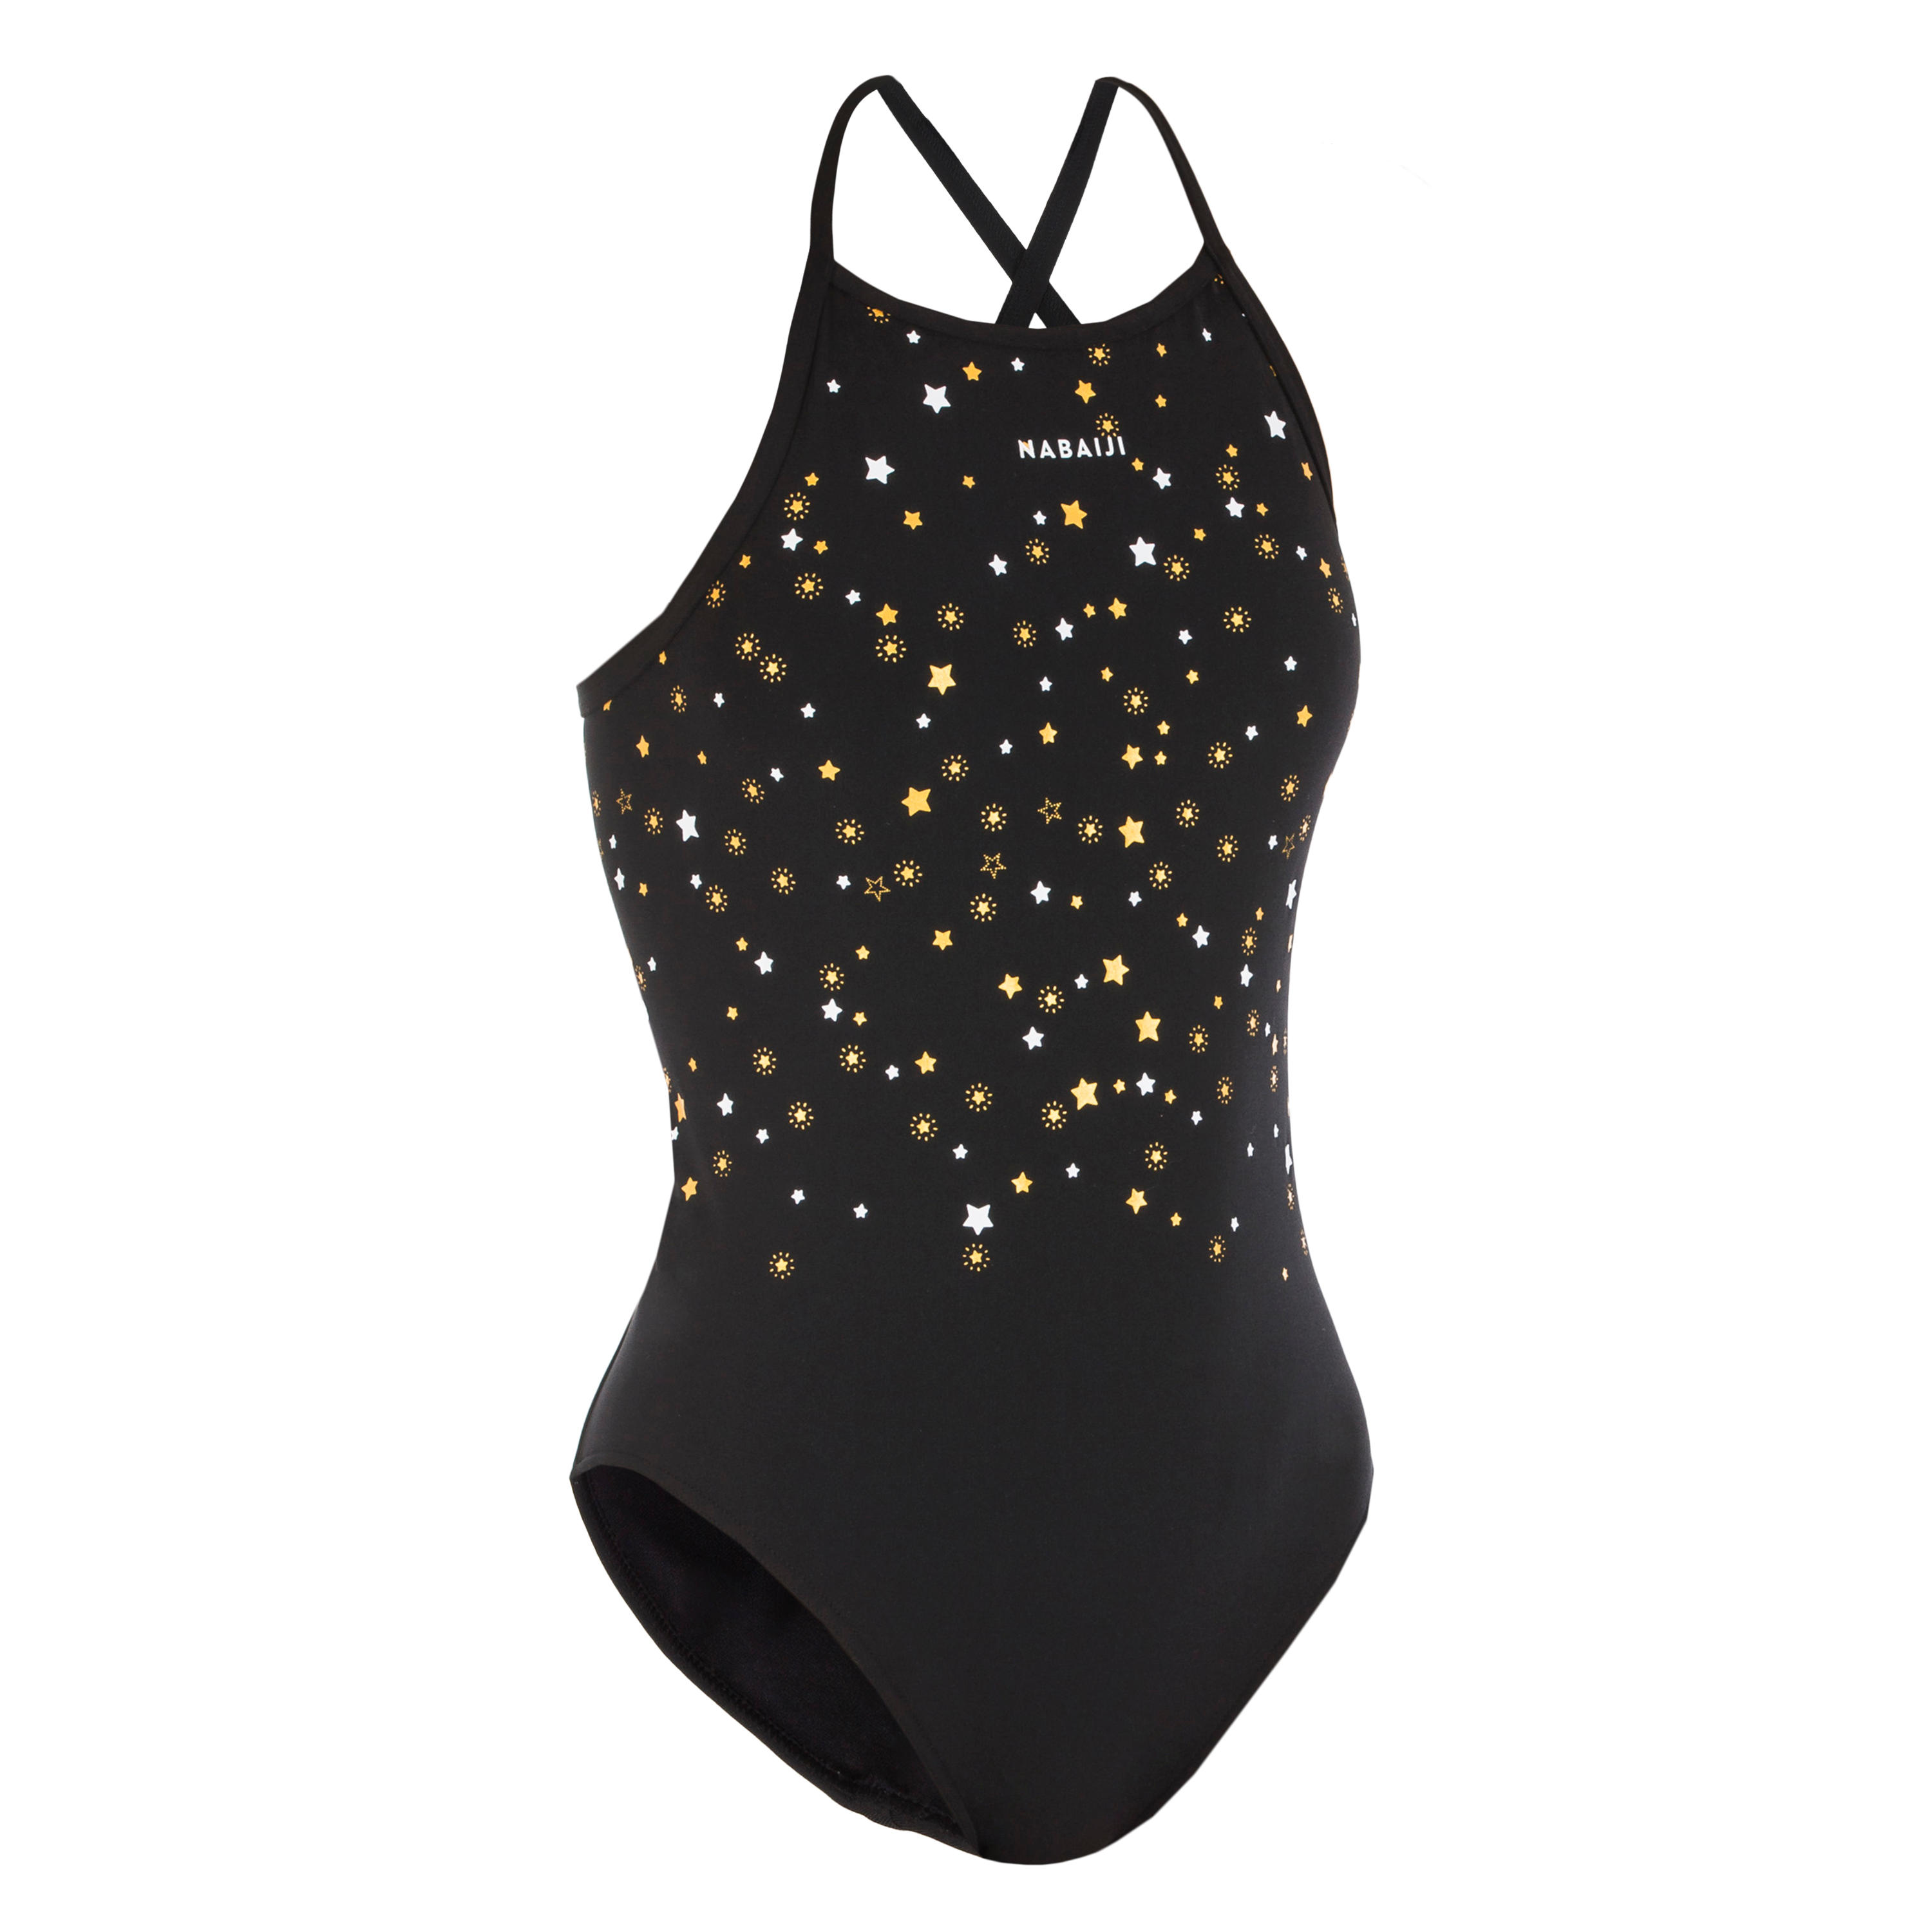 Girls' Swimming One-Piece Swimsuit Jade Star - Black 5/5